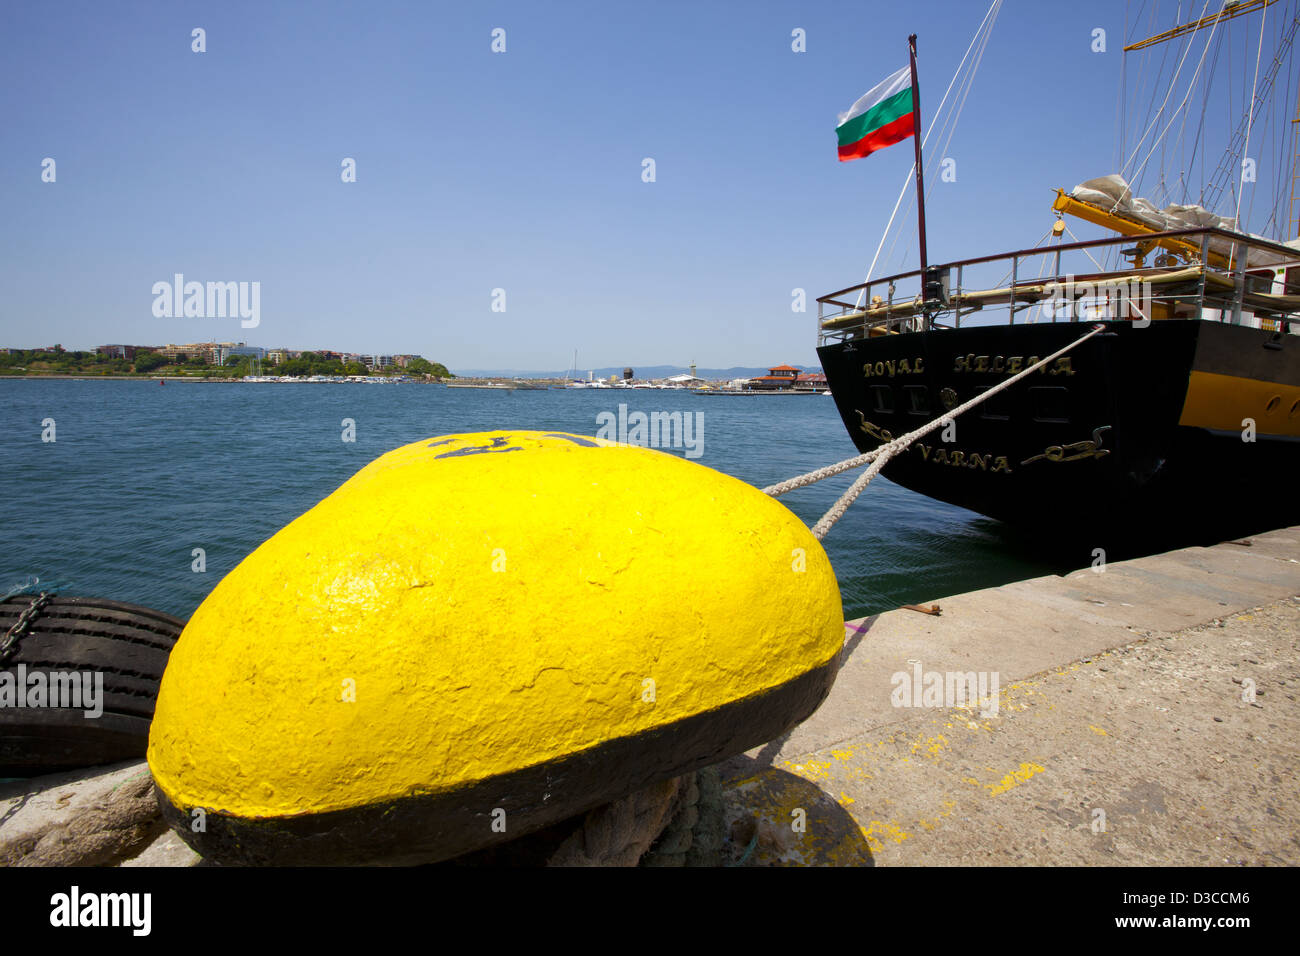 Bulgaria, Europe, Black Sea, Nessebar, Seaport, Harbor, Moored Ship, Mooring Line Tied To Yellow Bollard, Bulgarian Flag Stock Photo